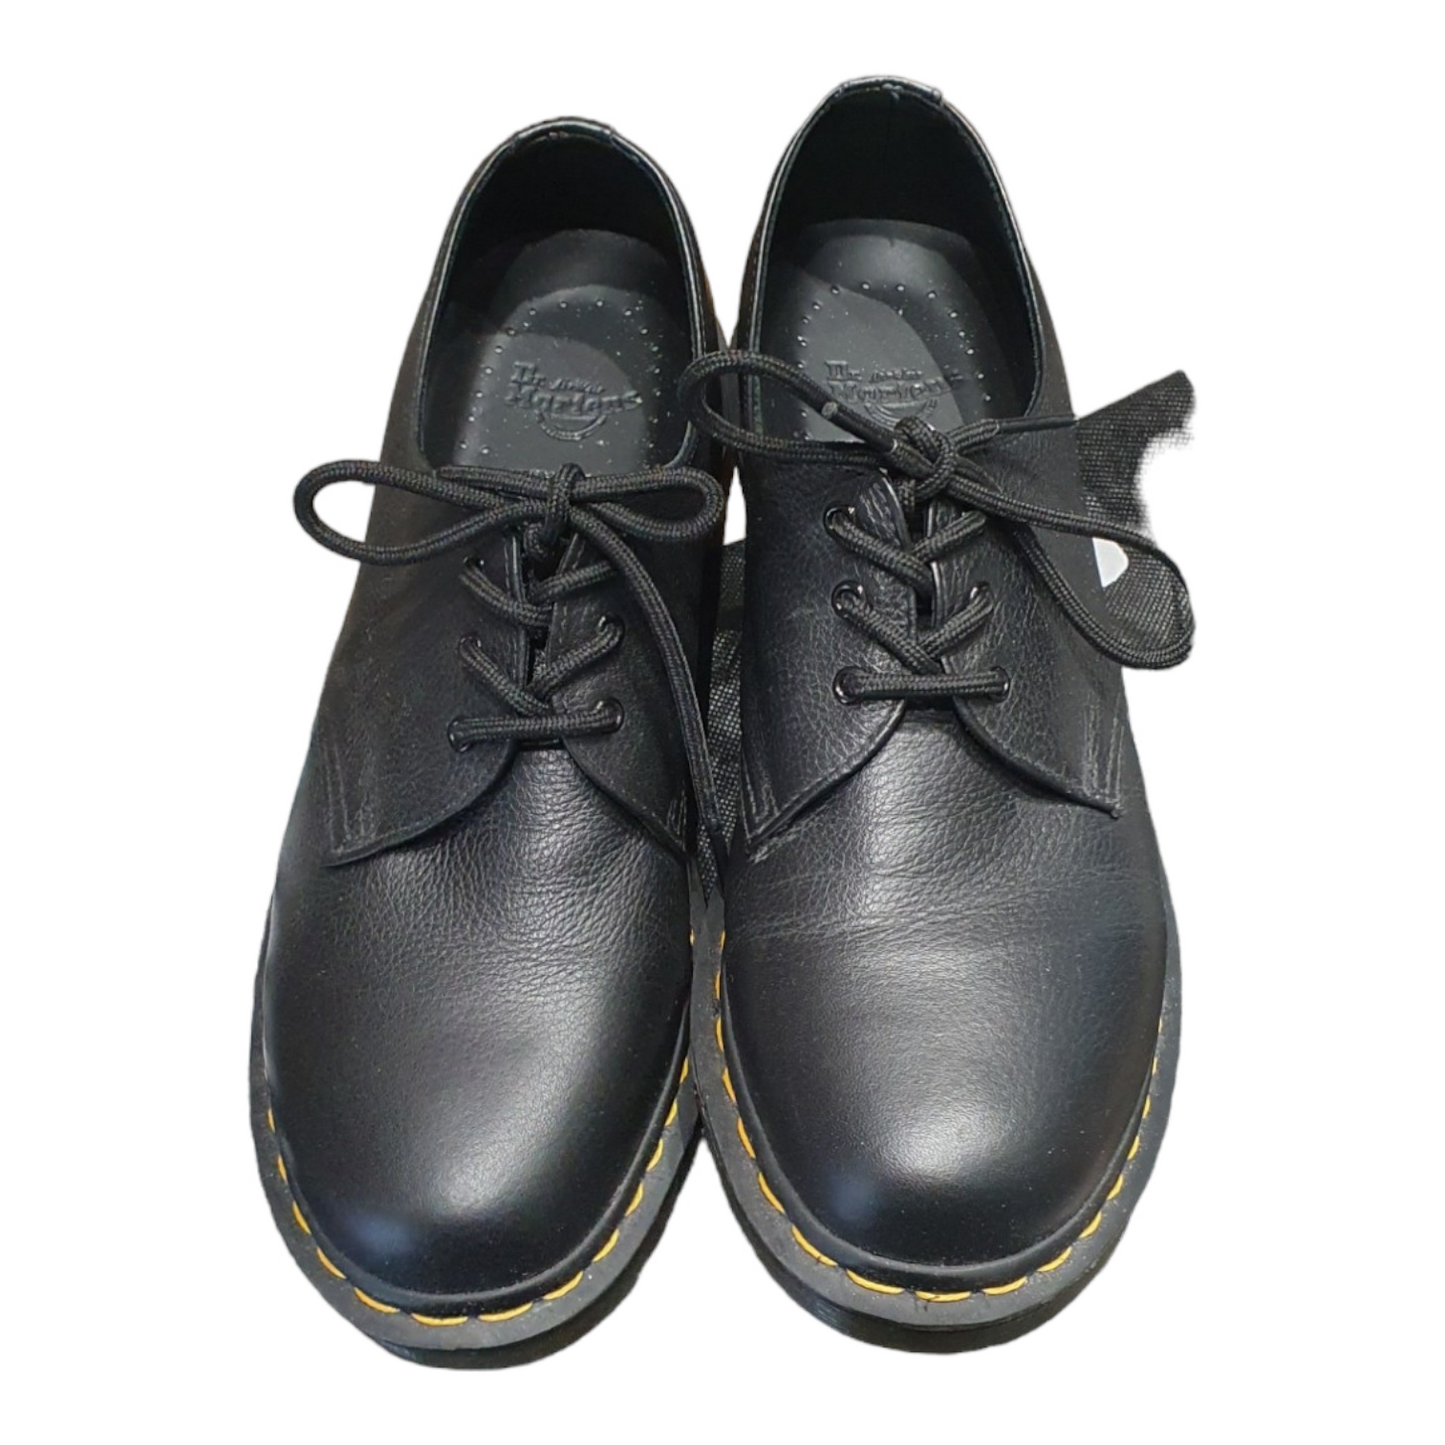 Dr Martens,  size 8, black leather 3 eye shoes